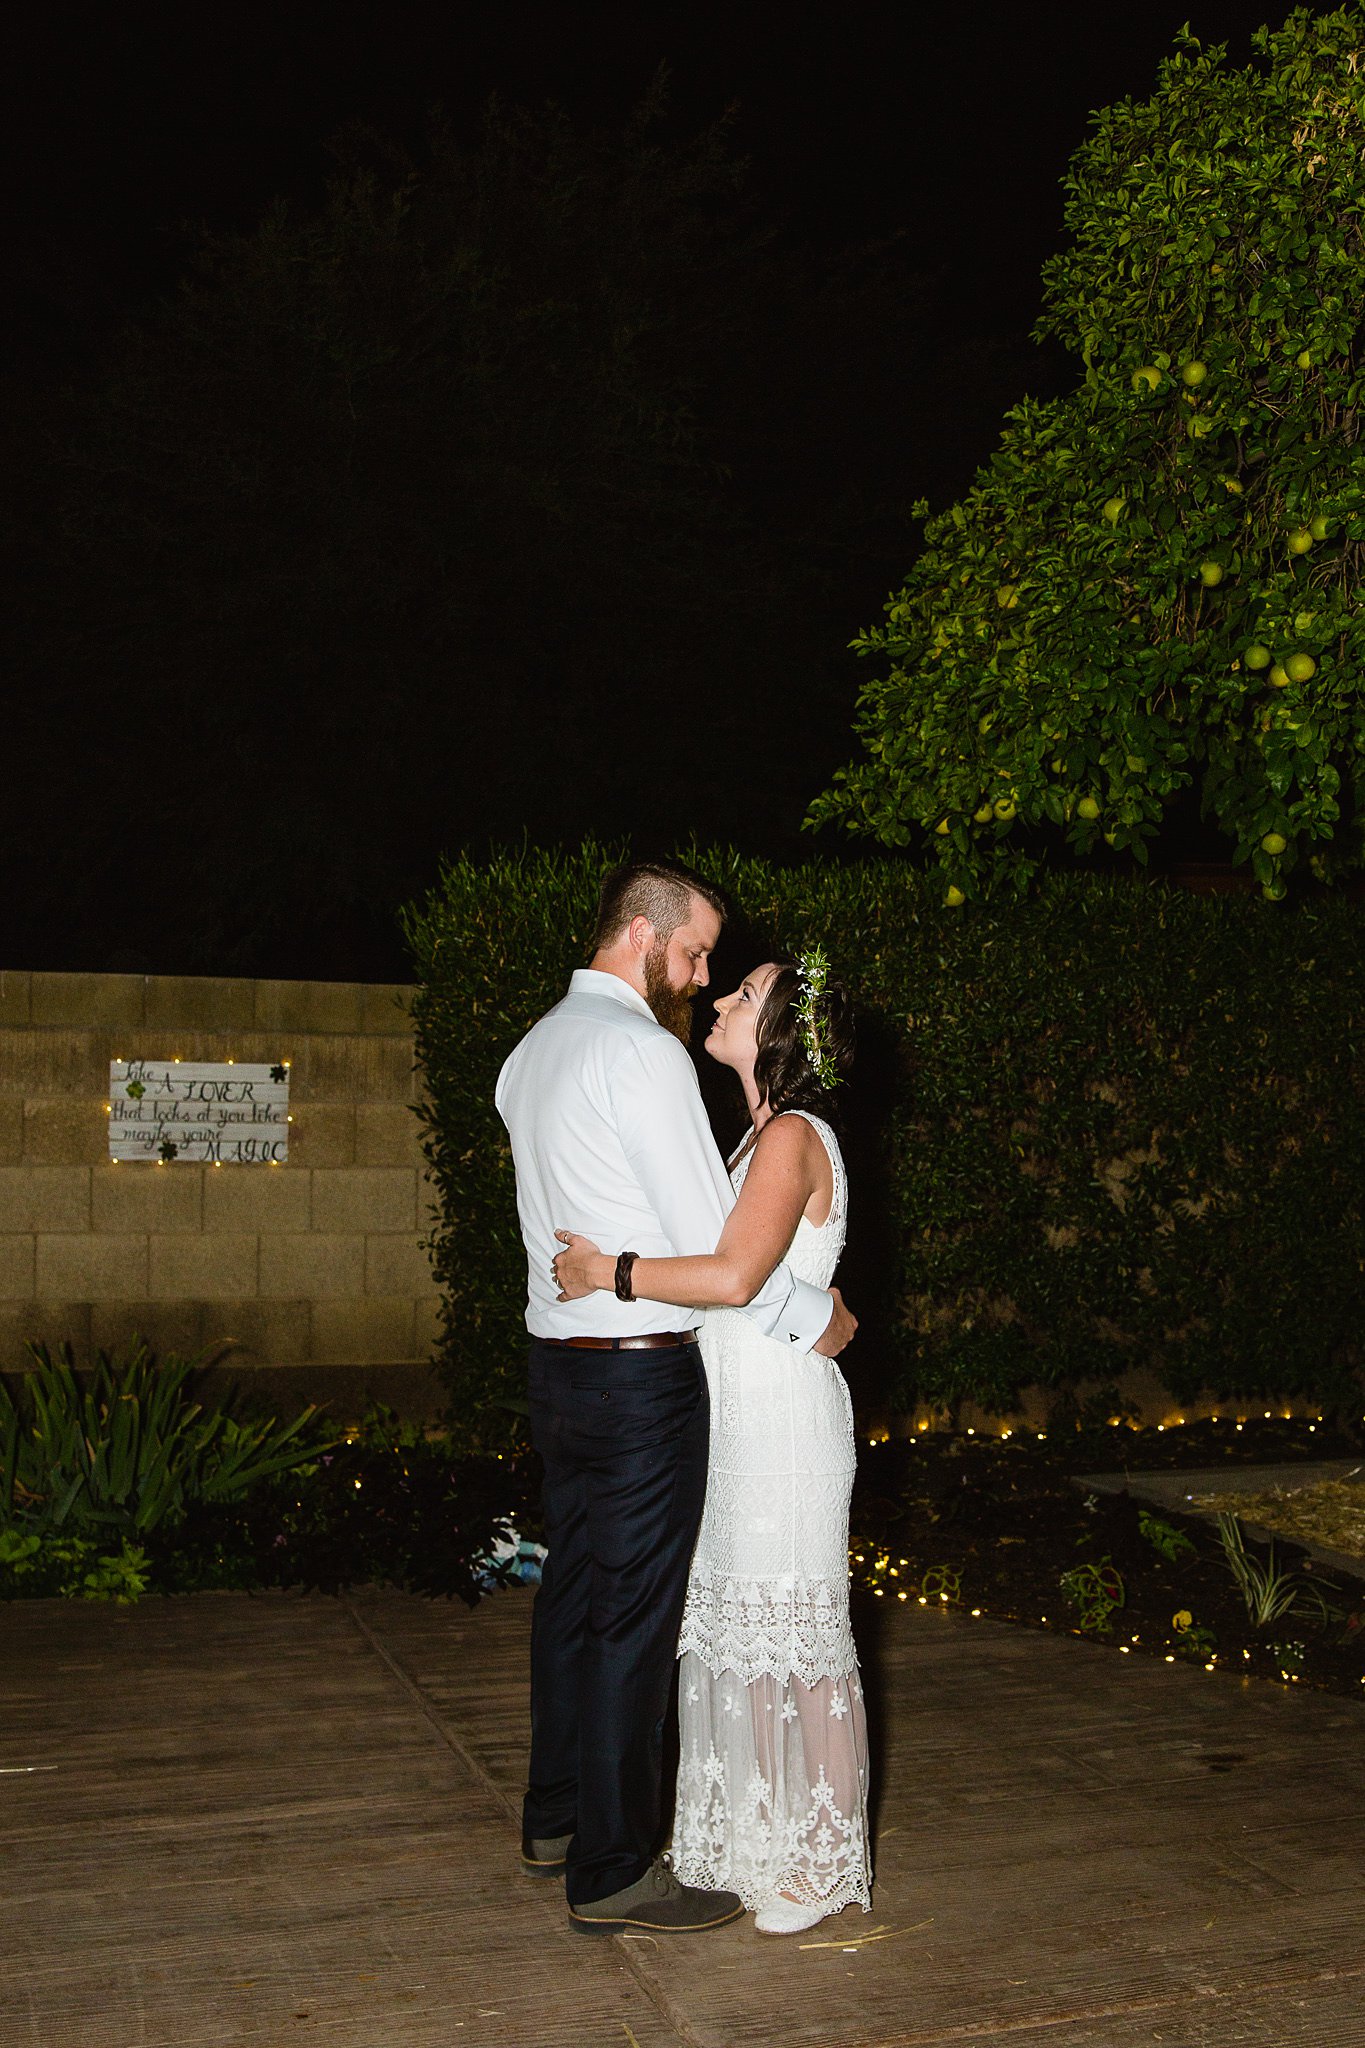 Bride and groom share their first dance at their backyard garden wedding by Arizona wedding photographer PMA Photography.